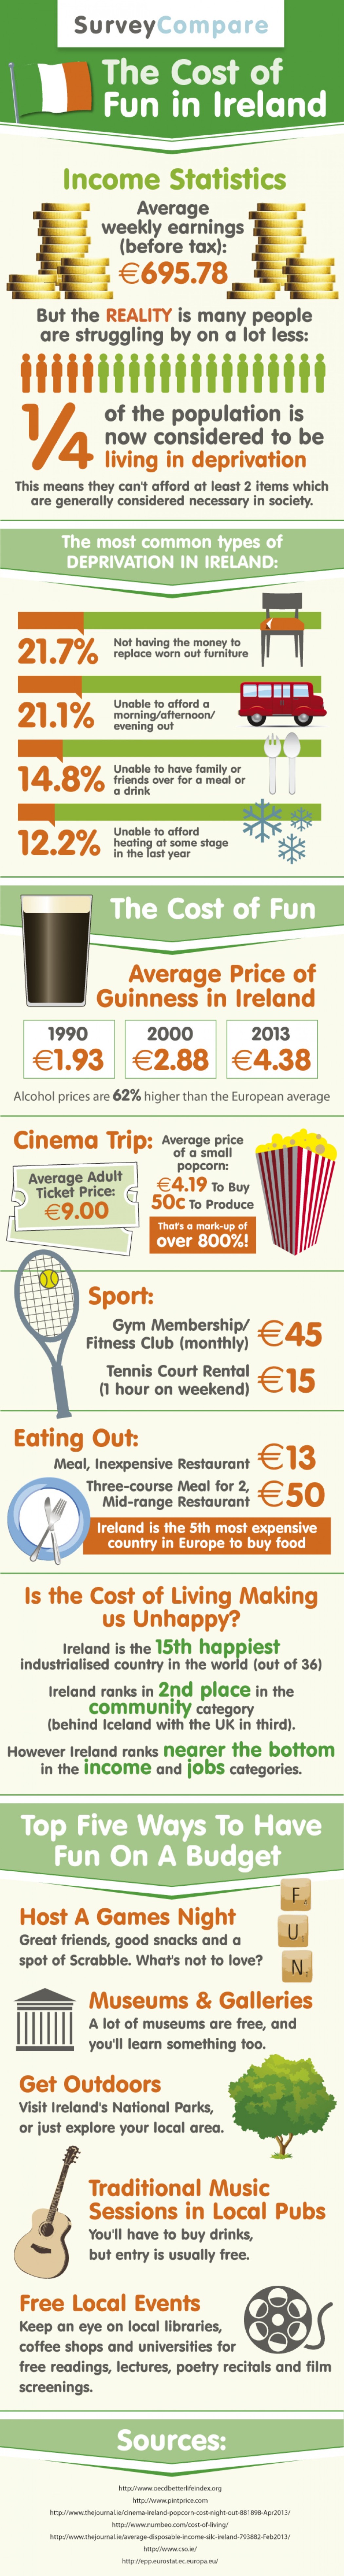 The cost of fun in Ireland